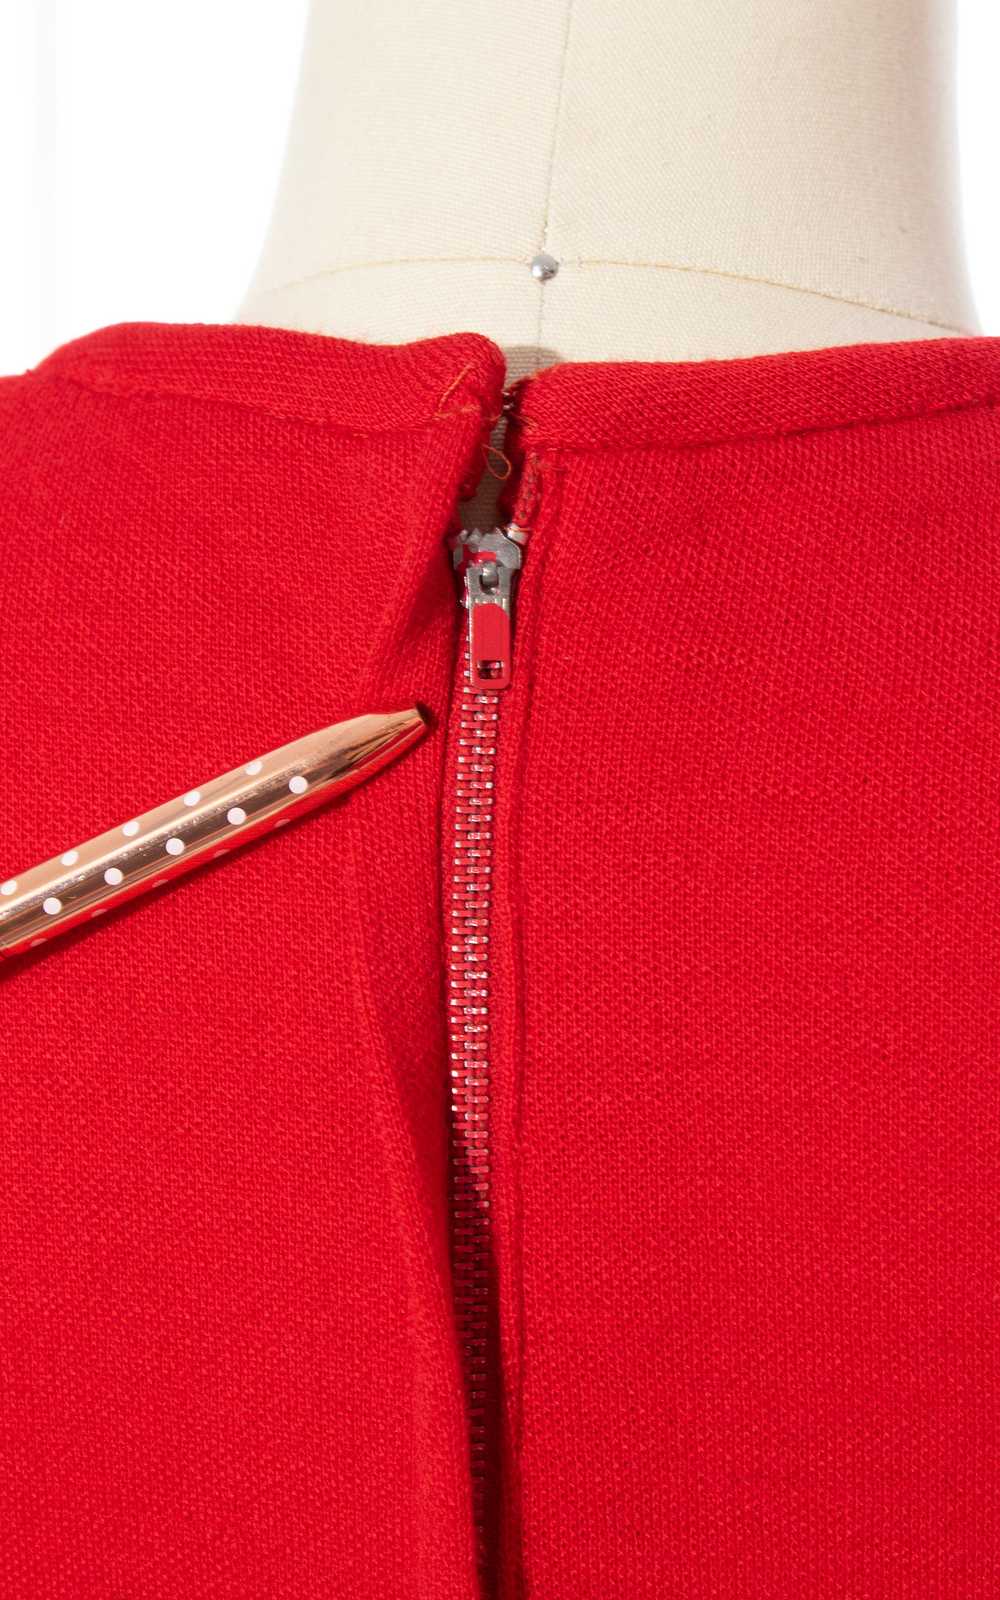 1960s Red Knit Wool Wiggle Dress | x-small/small - image 6